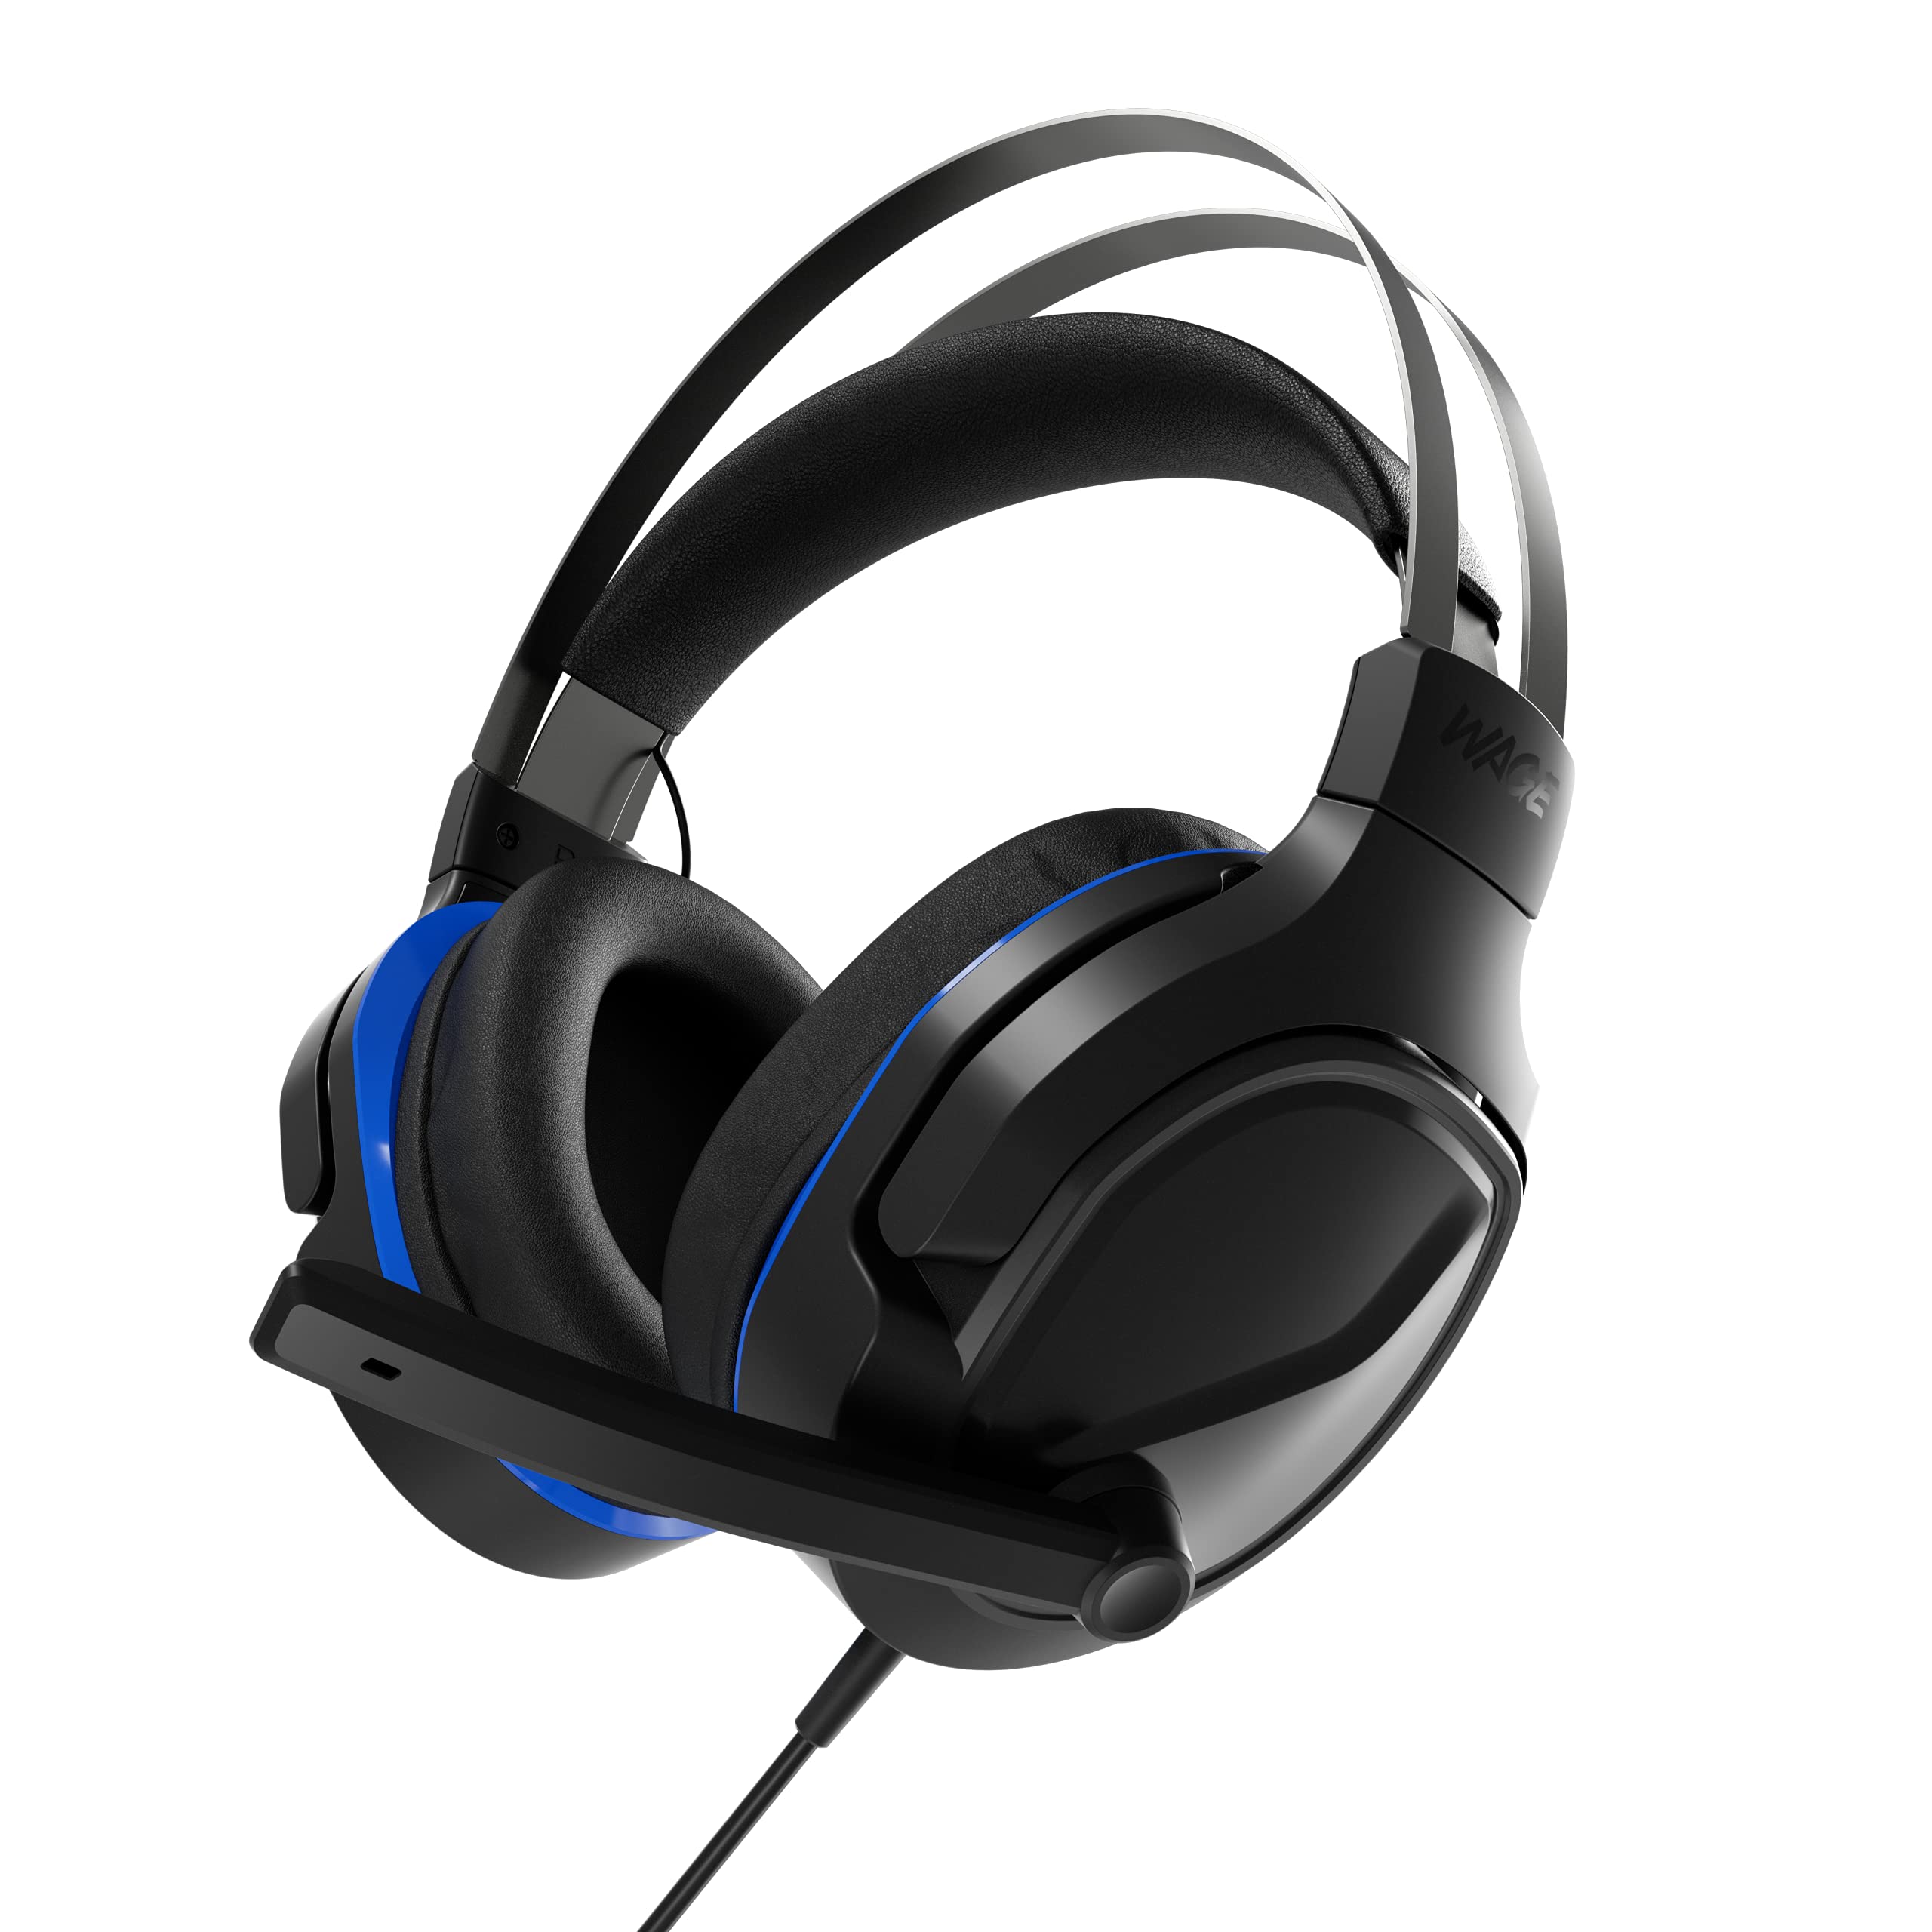 $11.80: Wage Pro Universal Gaming Headset - Black/Blue